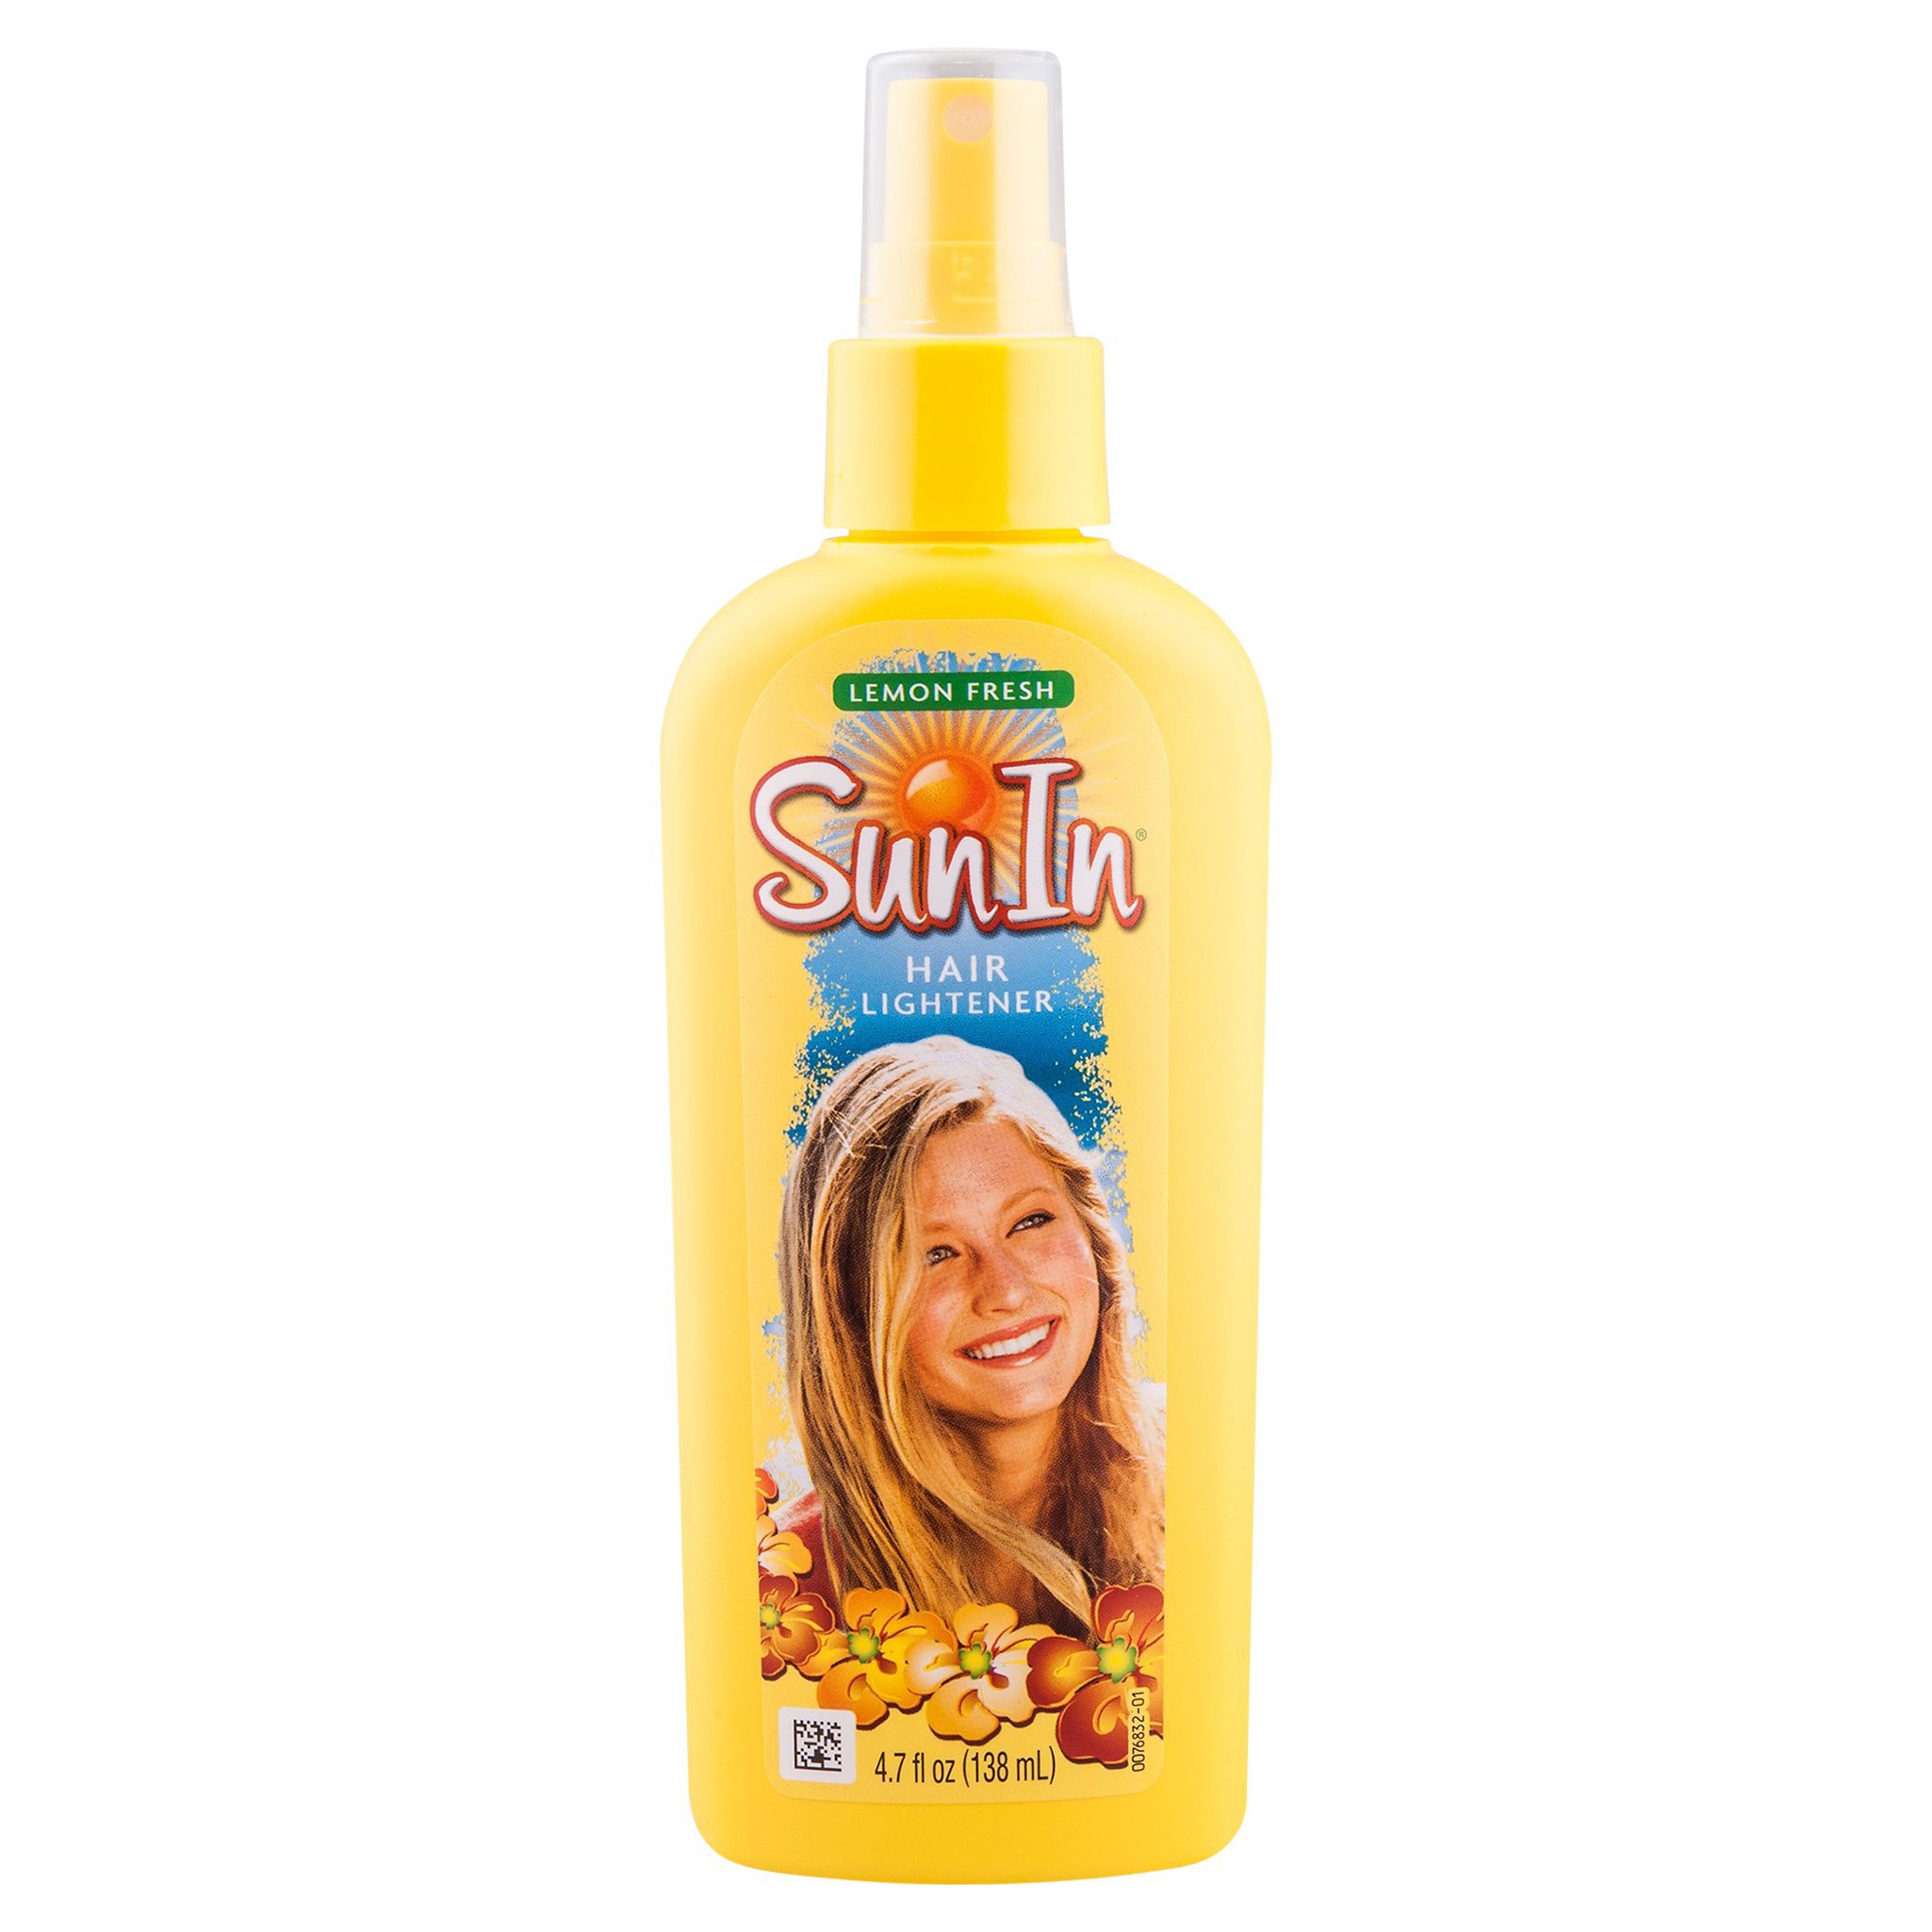 Sun In Hair Lightener Lemon Fresh Shop Hair Treatments At HEB